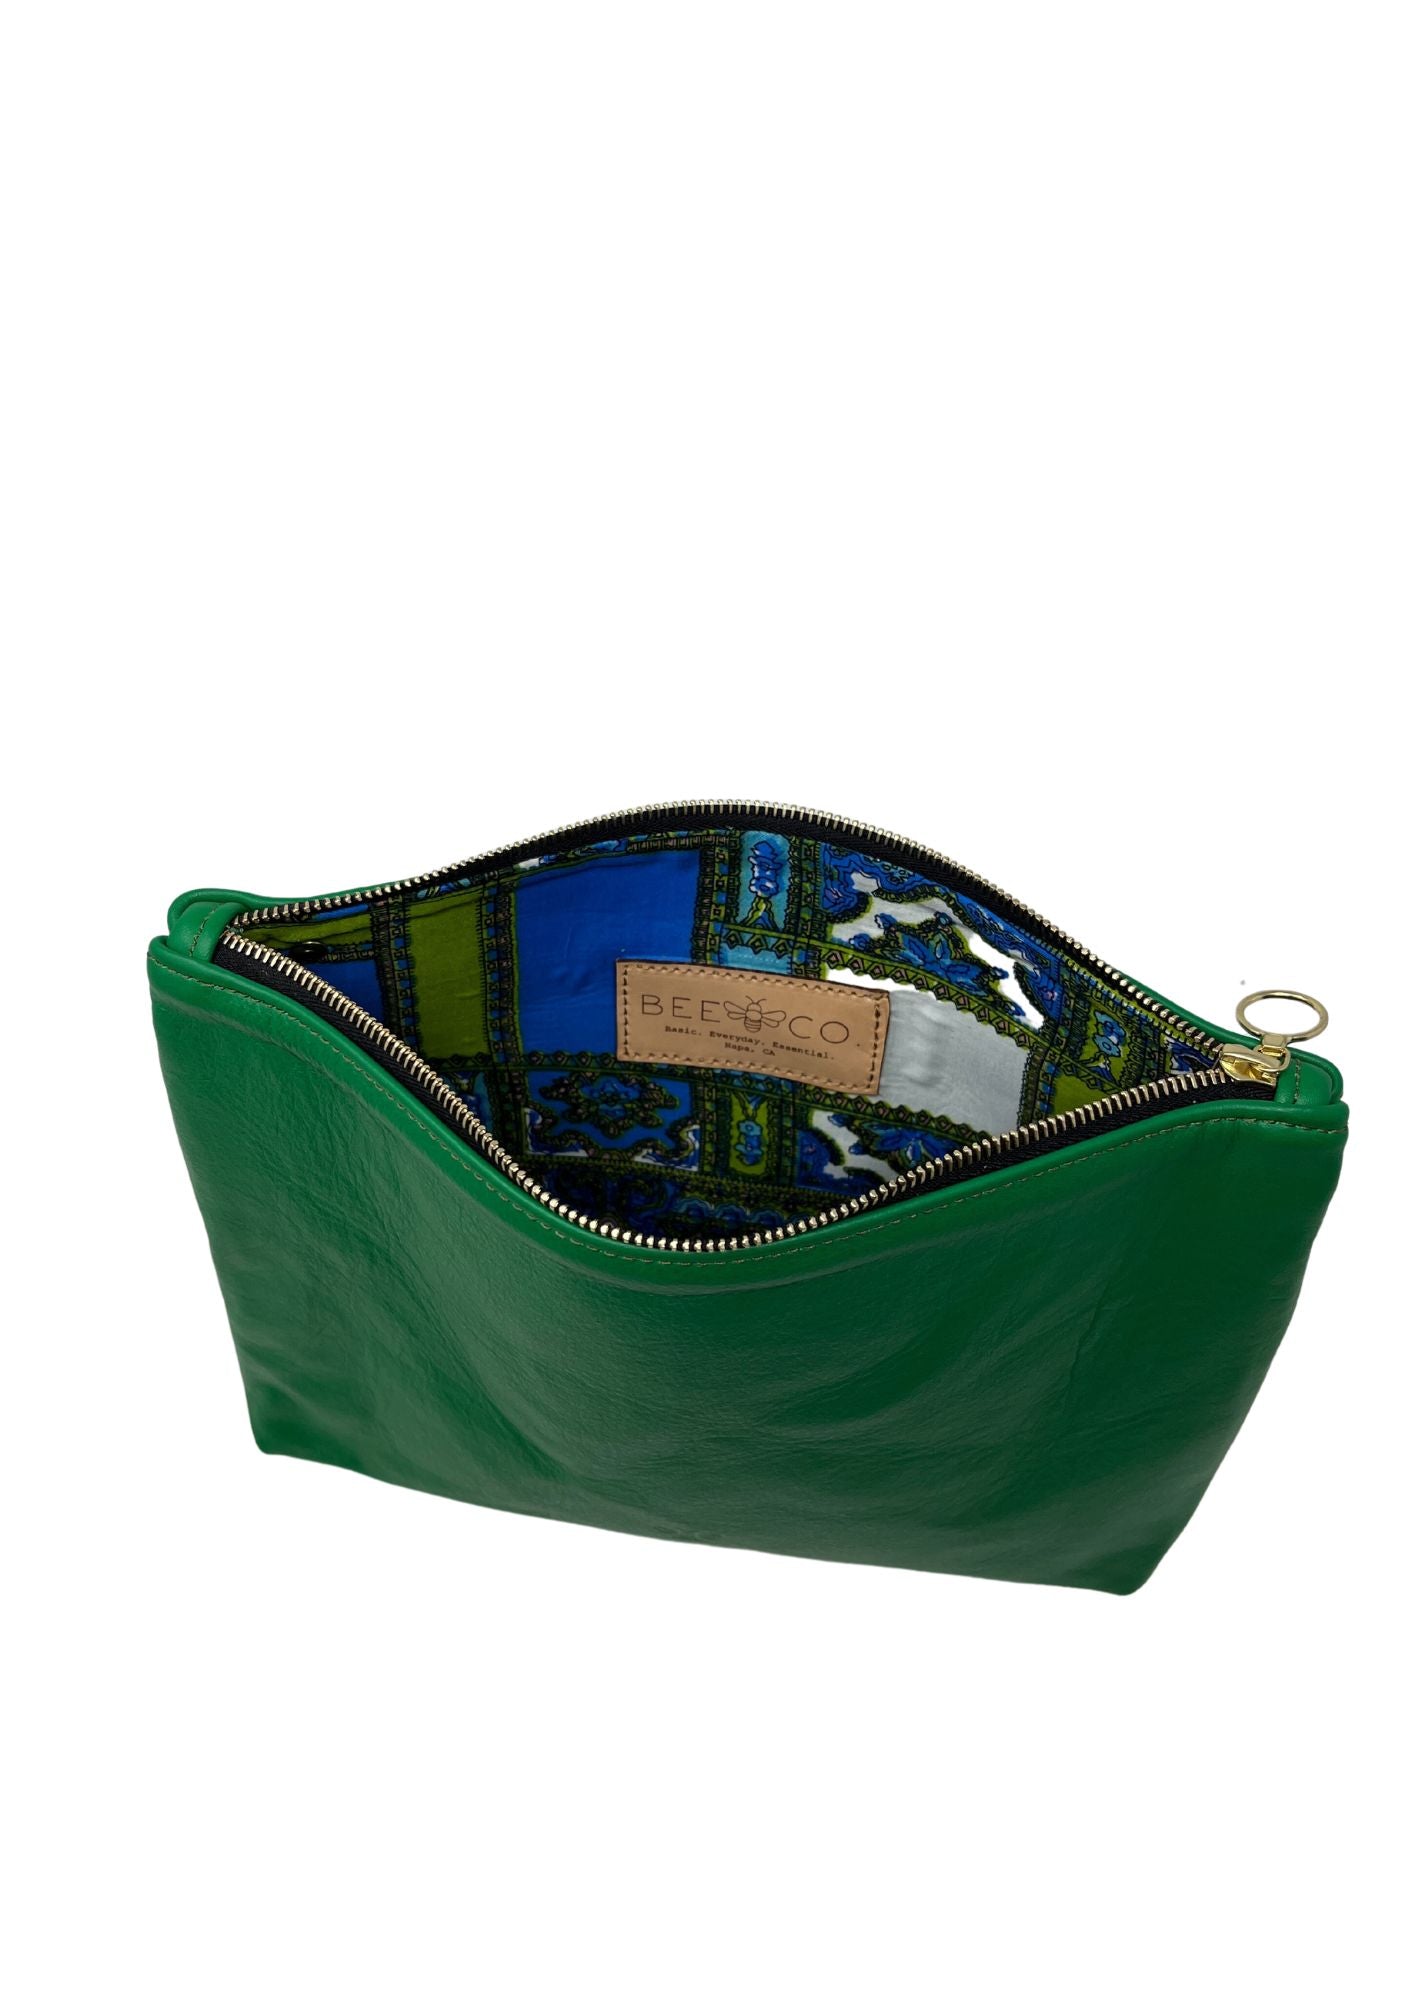 Frances Bag in Italian Green leather